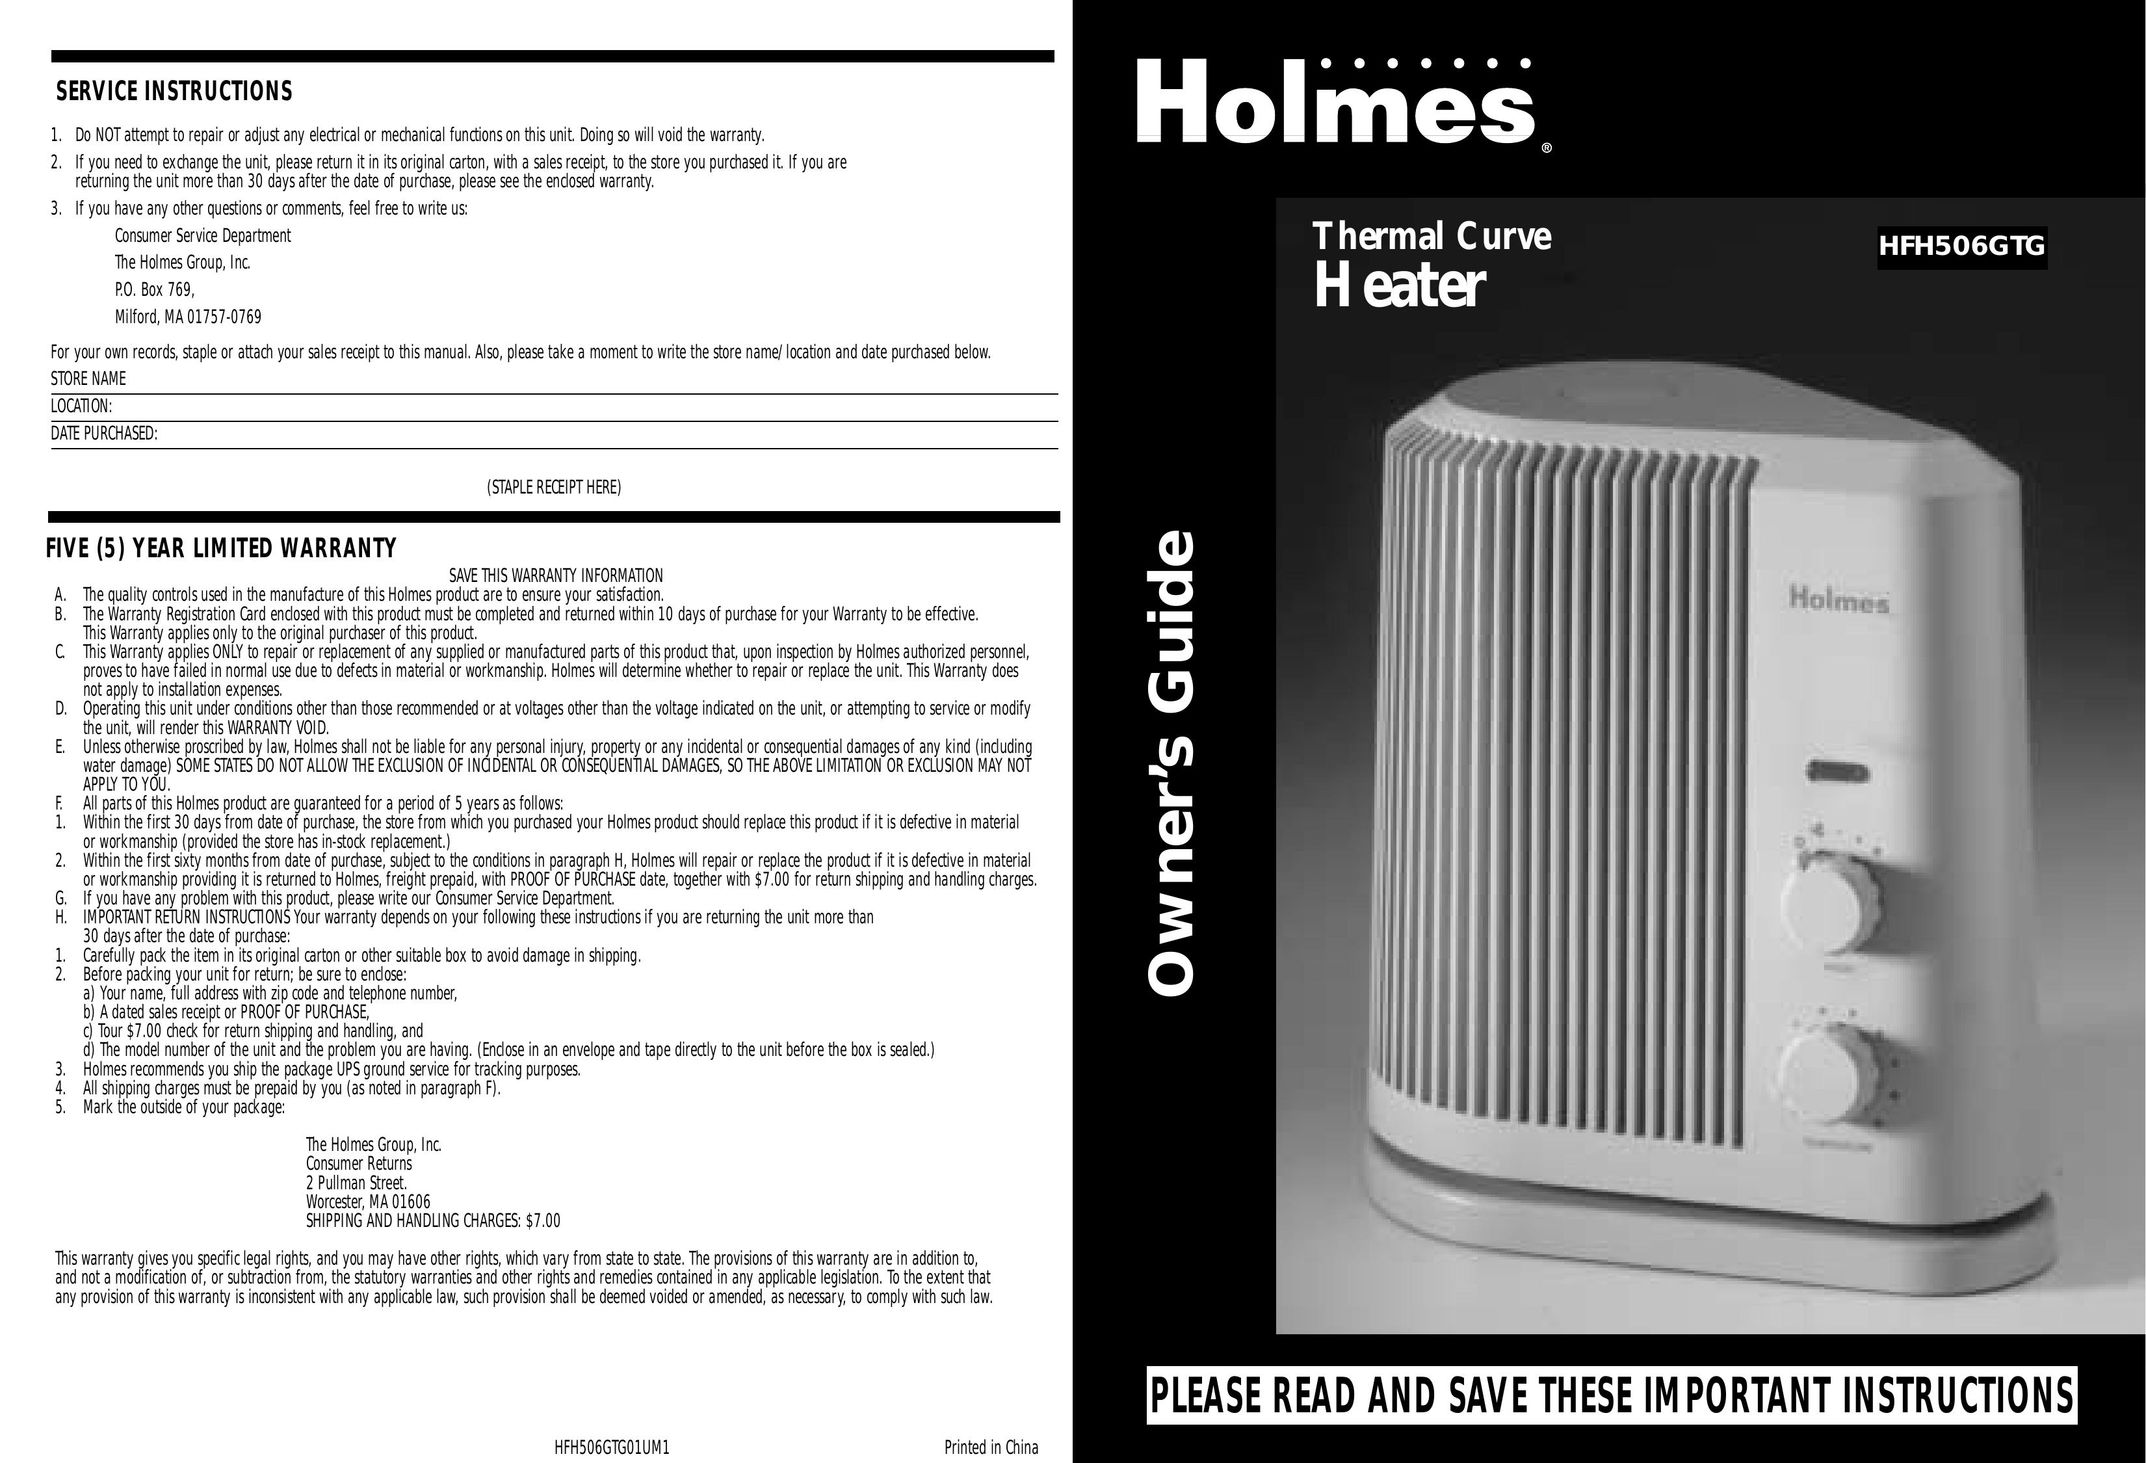 Holmes HFH506GTG Dehumidifier User Manual